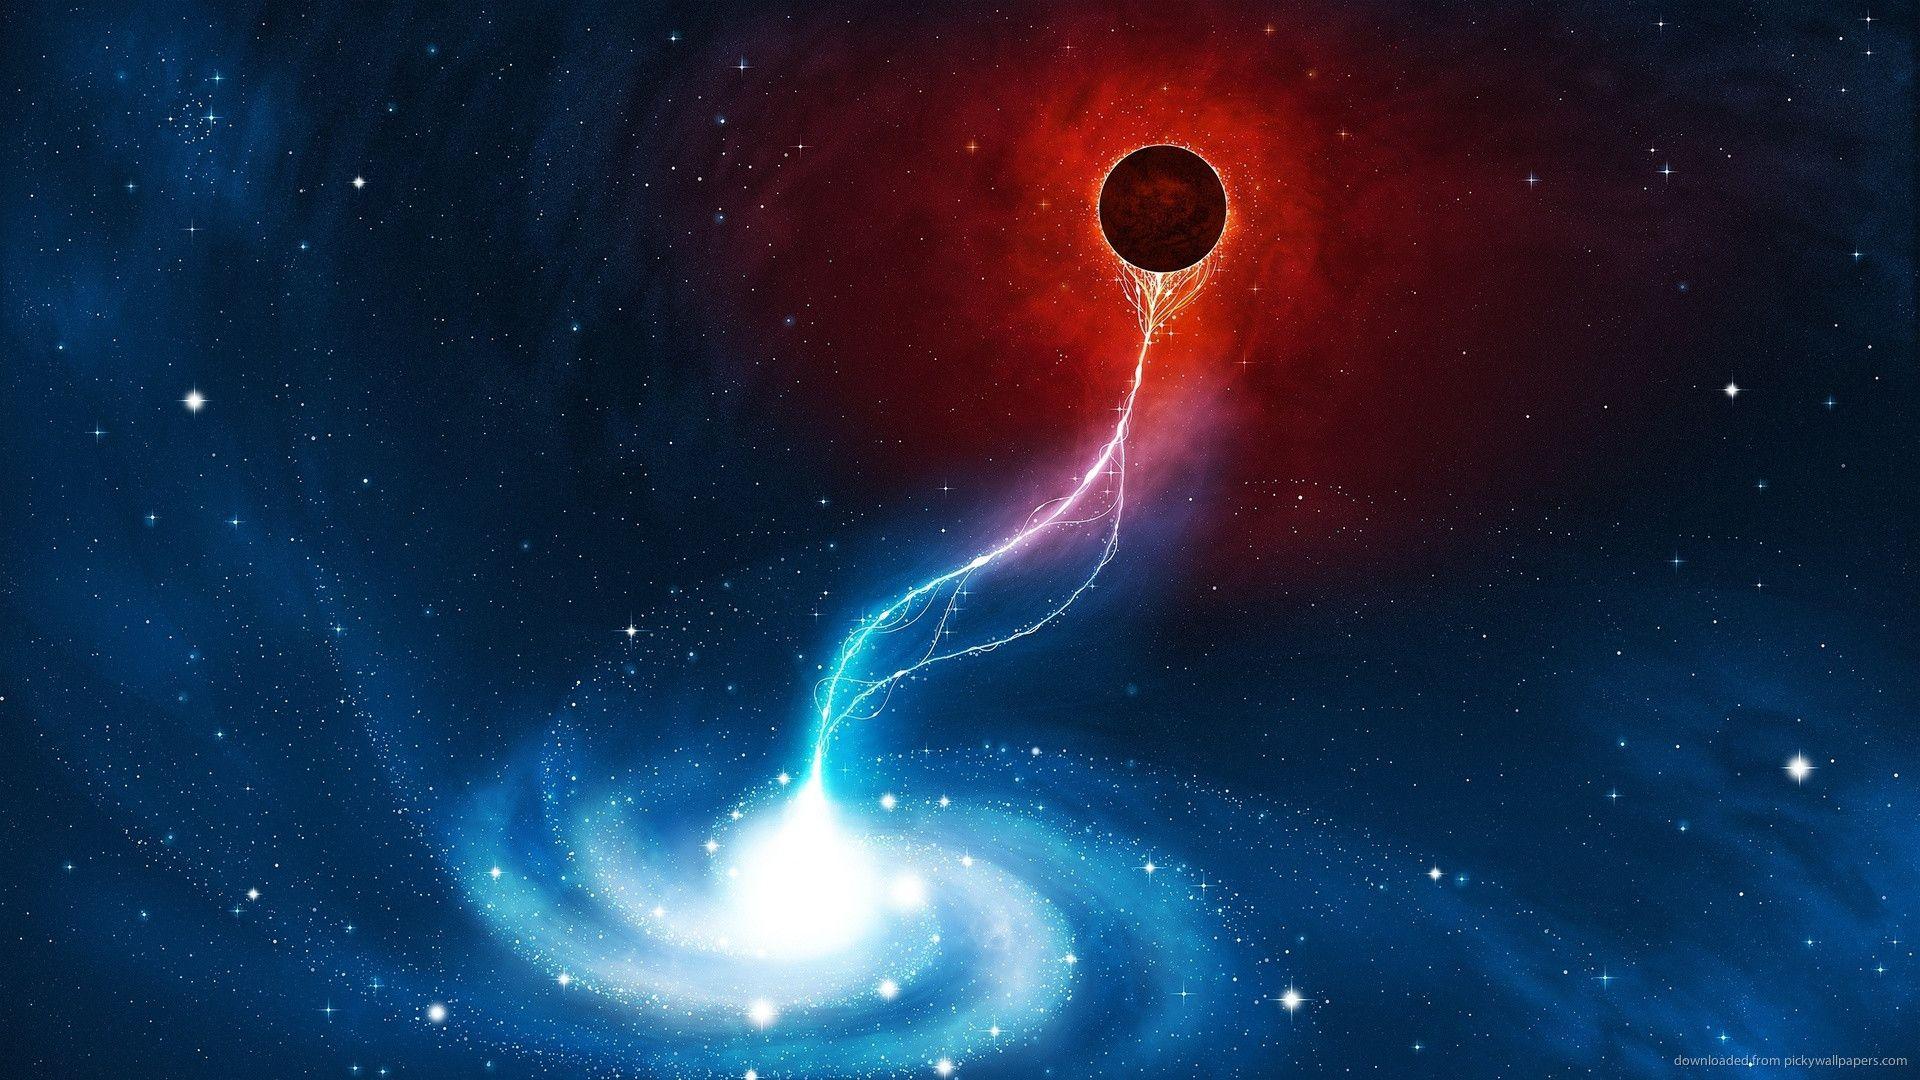 Black Hole Wallpaper: Space Black Hole Wallpaper. .Ssofc